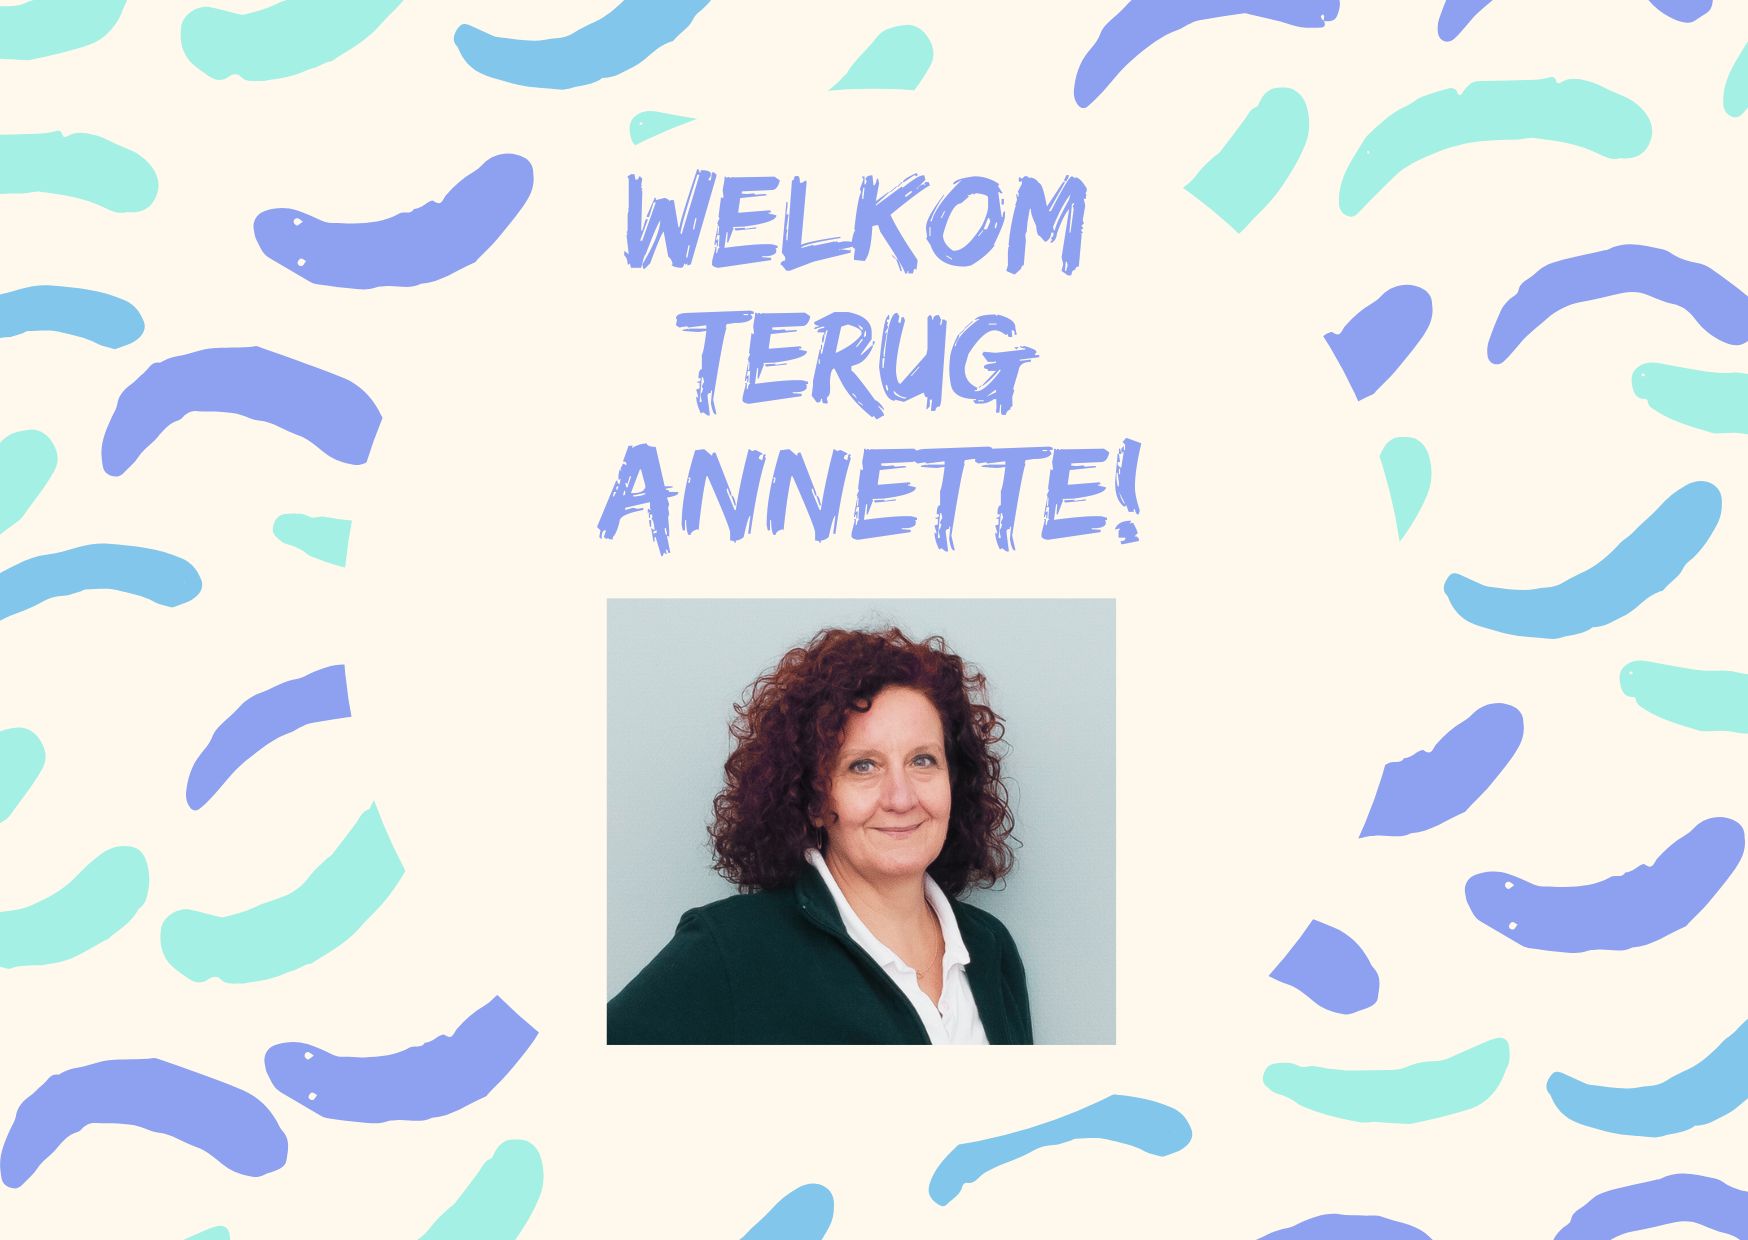 Welkom terug Annette!